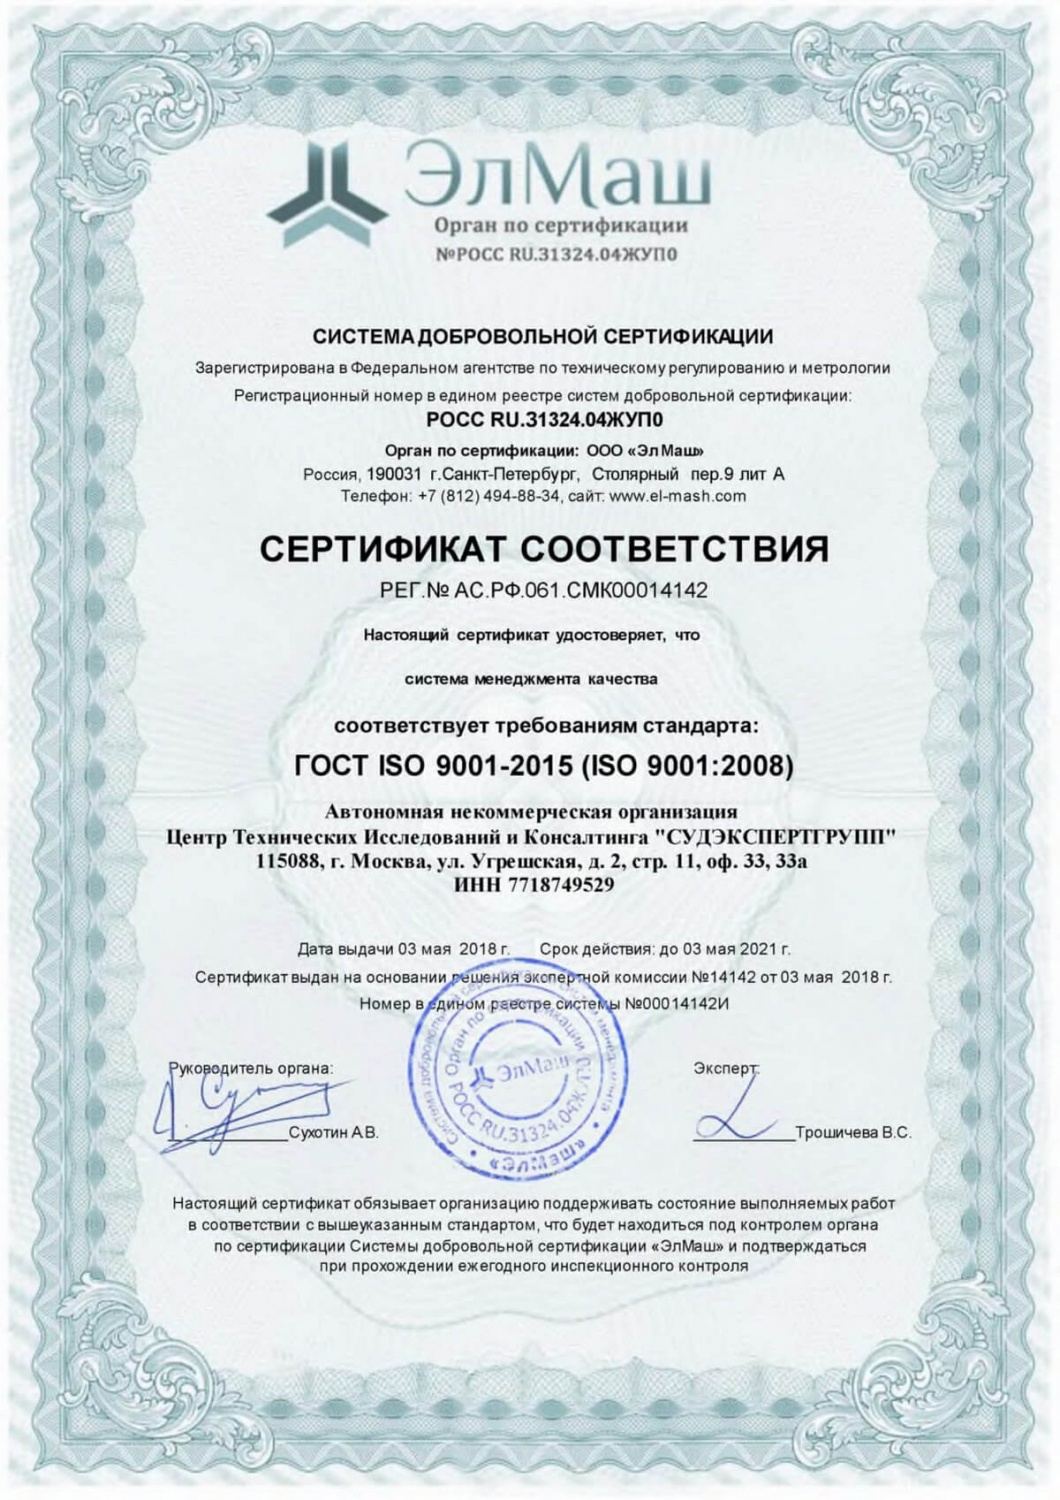 Сертификат соответствия ГОСТ ISO 9001-2015 (ISO 9001:2008)